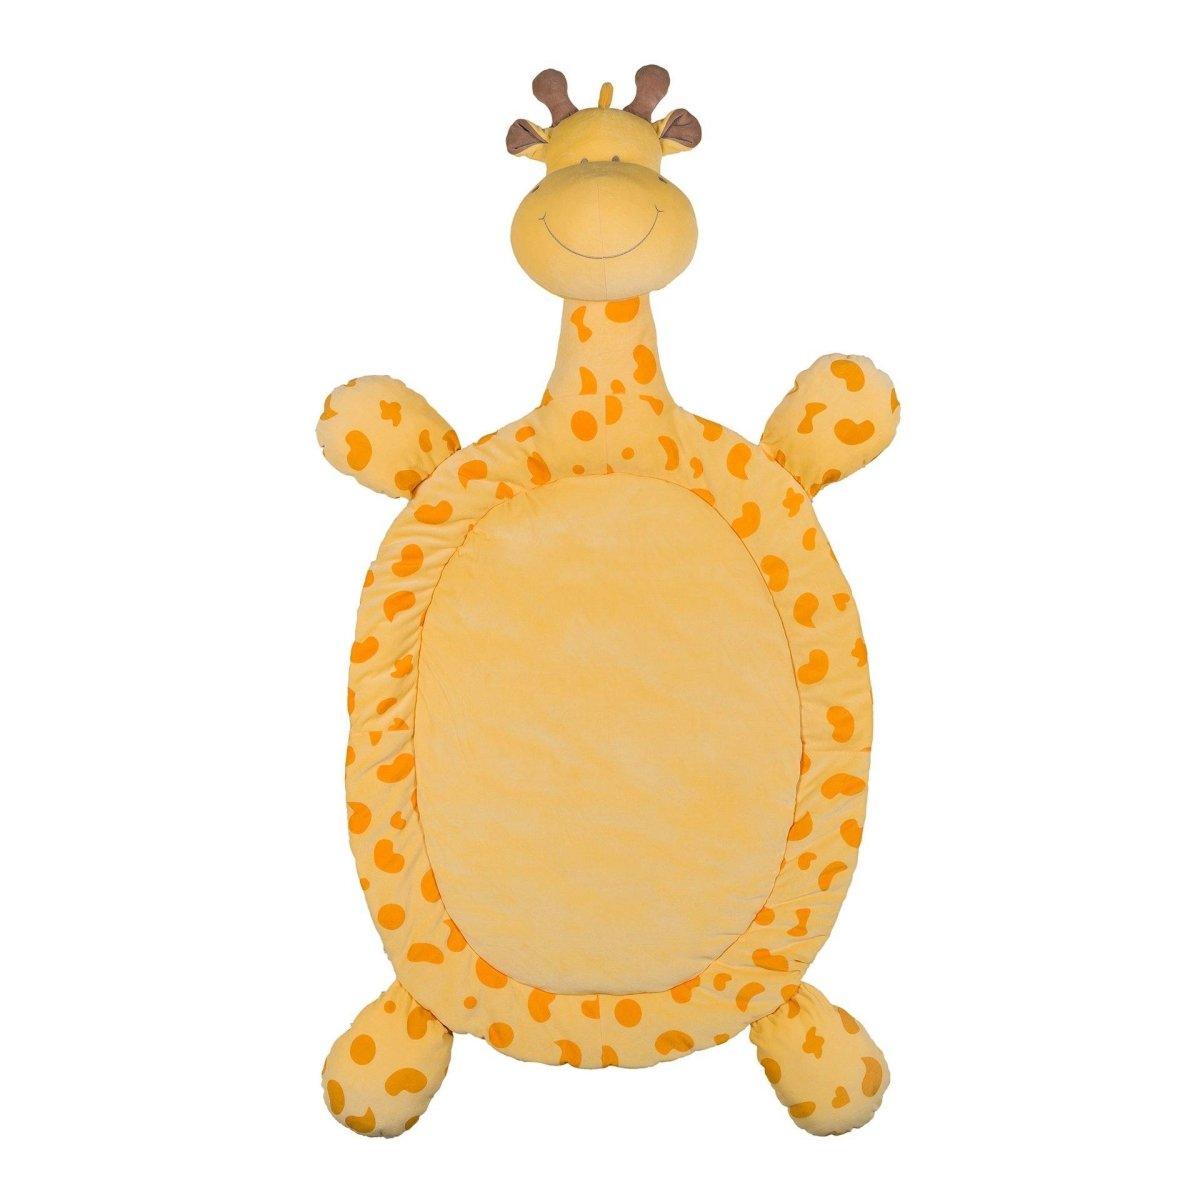 Loc De Joaca Girafa Trilli Plus Portocaliu Bebelusi Nanan 2118 - Camera Bebelusului